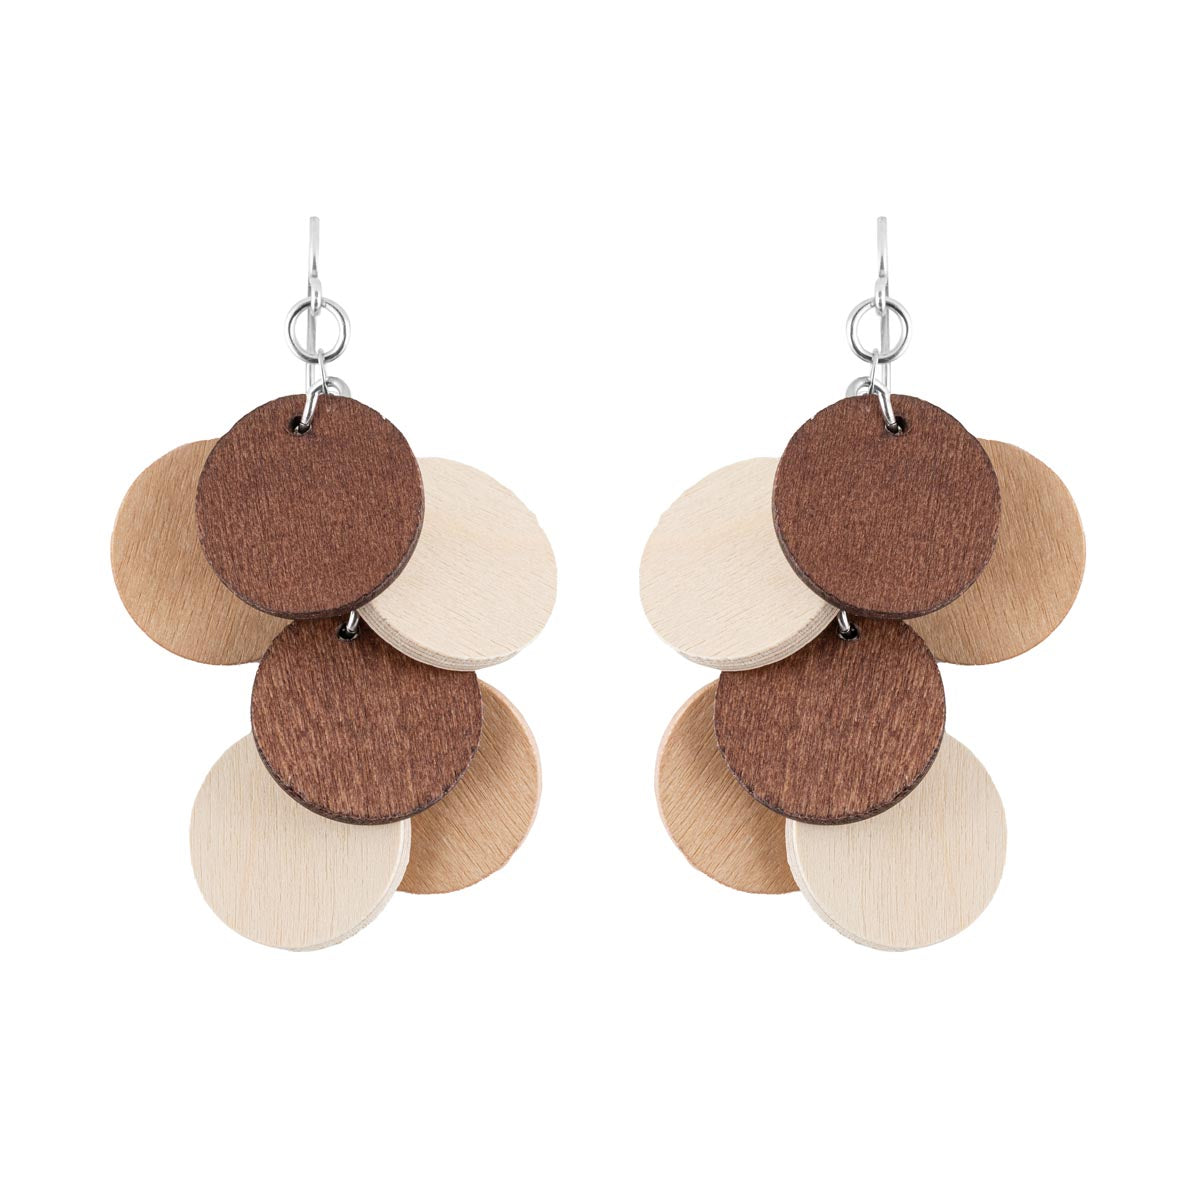 Juolukka earrings, brown